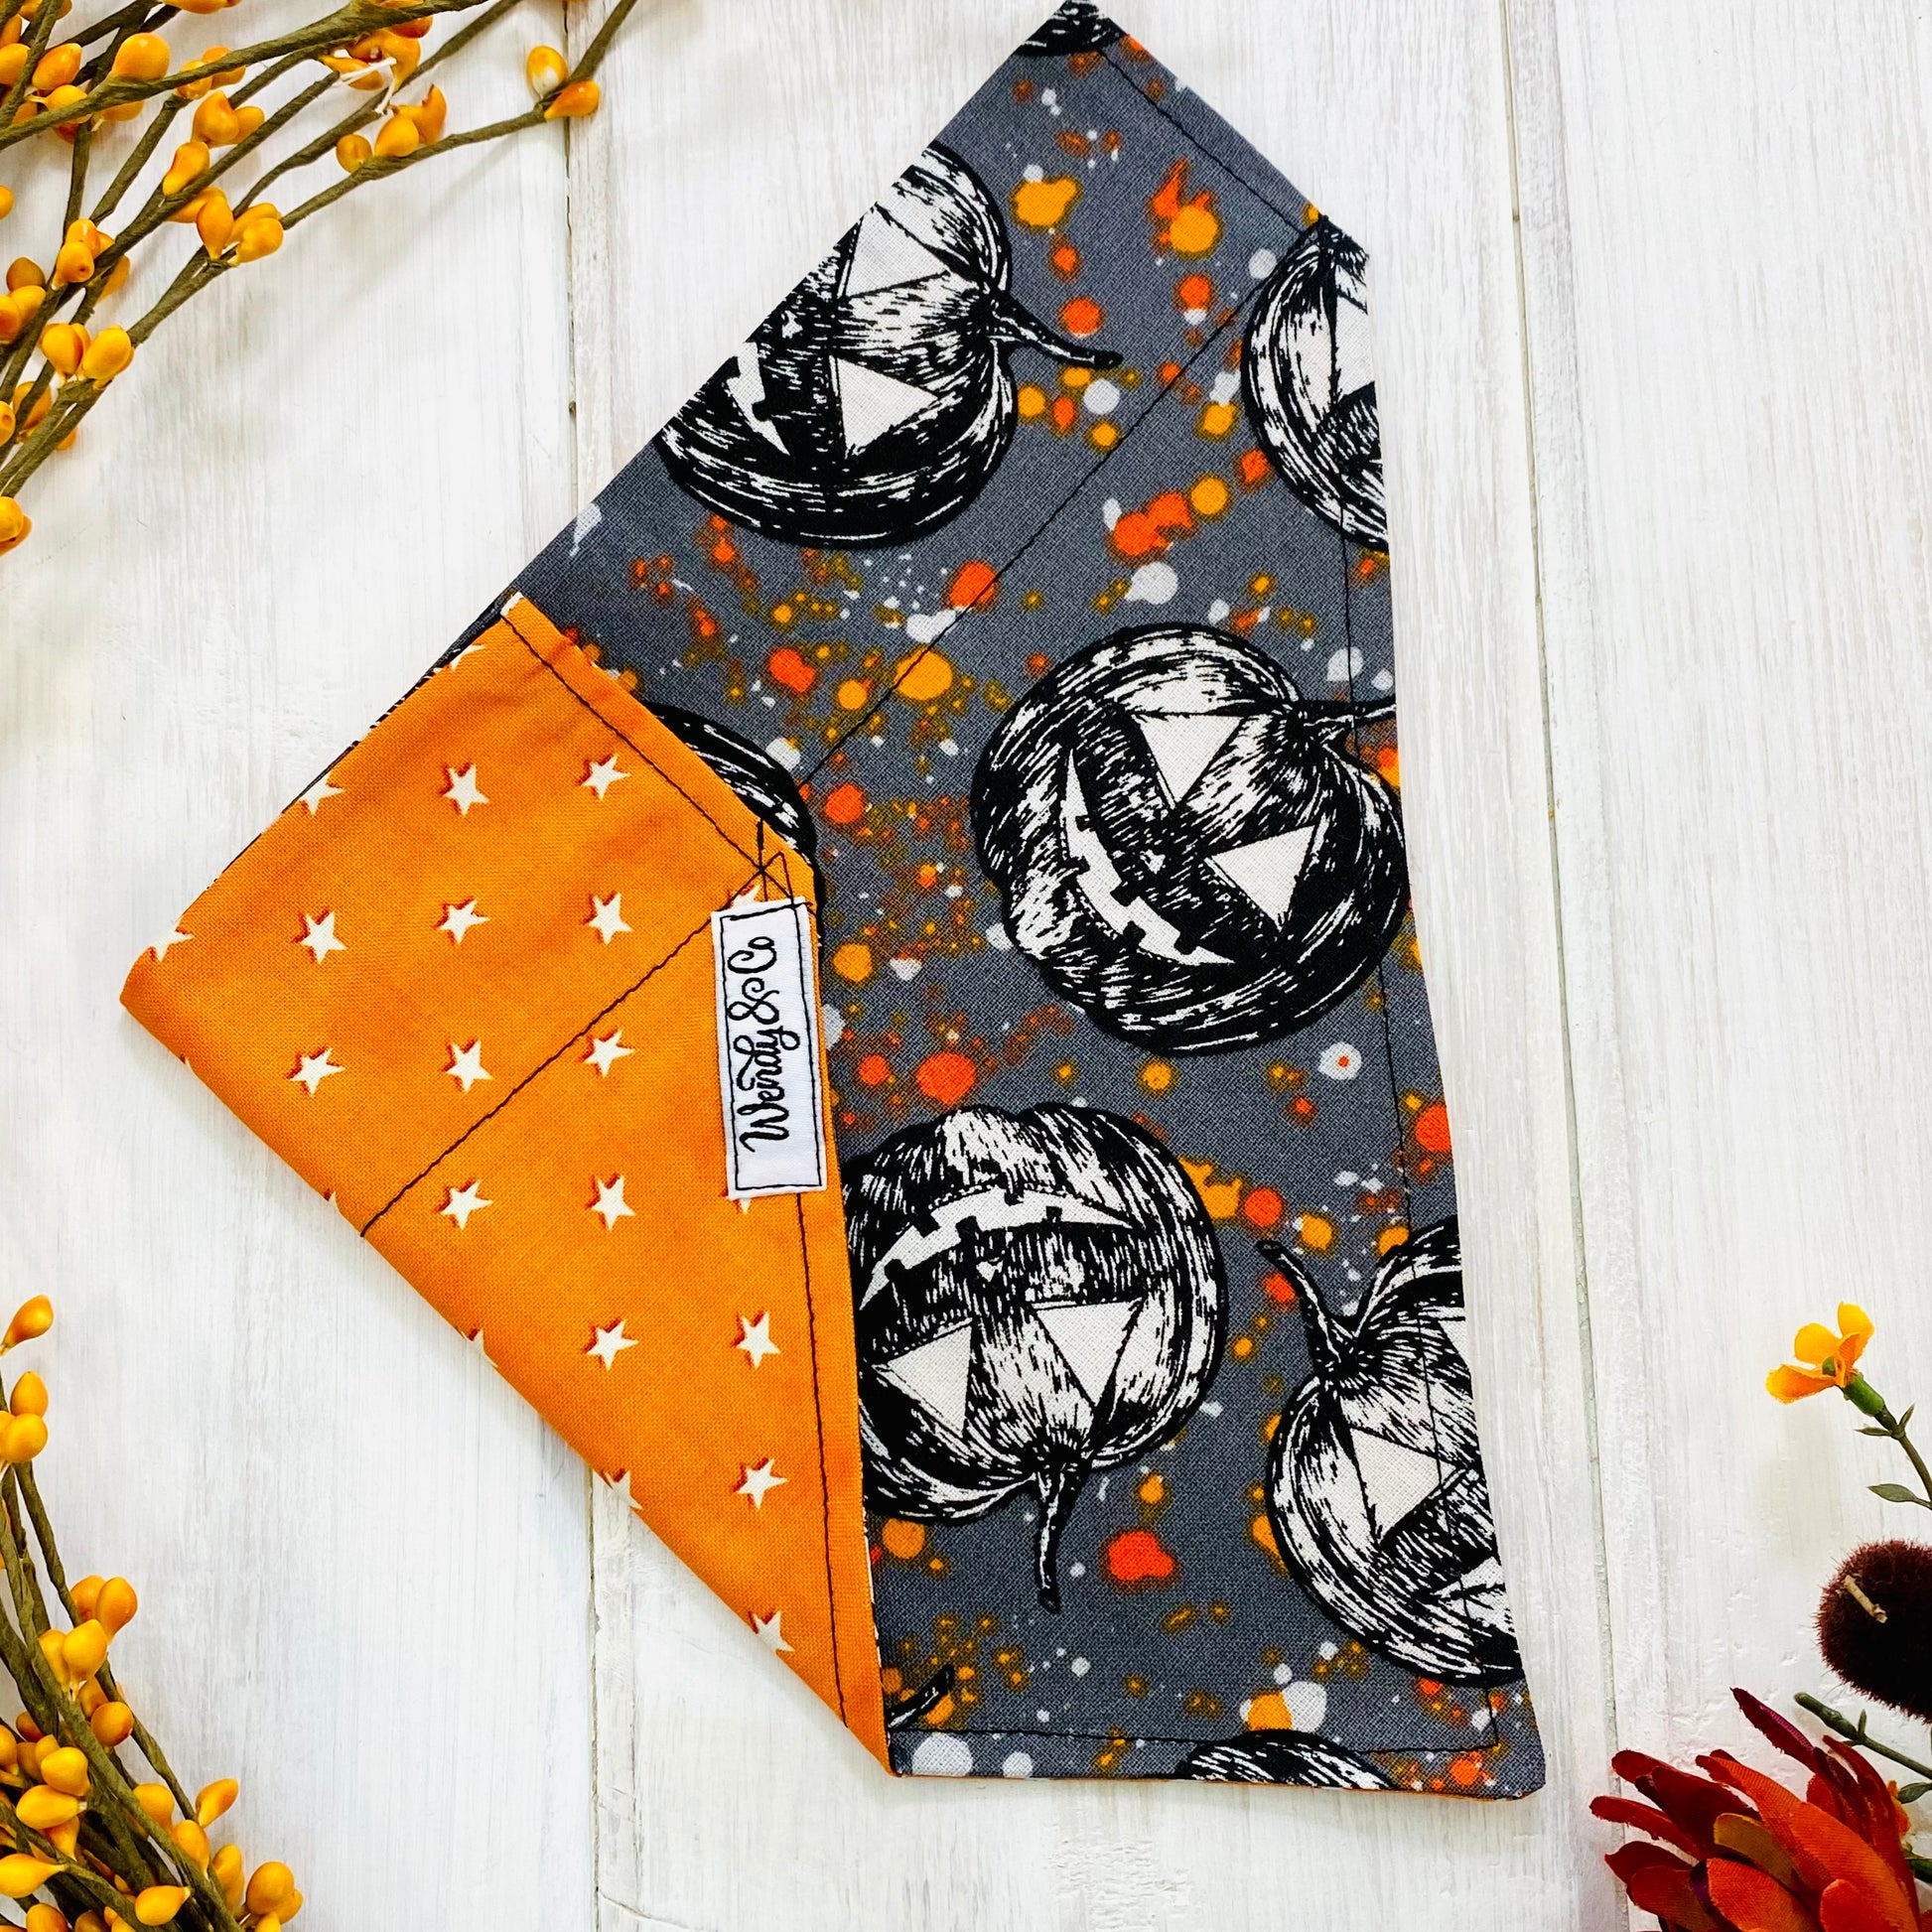 Reversible Halloween dog bandana, glows in the dark, spooky pumpkins and orange star pattern.